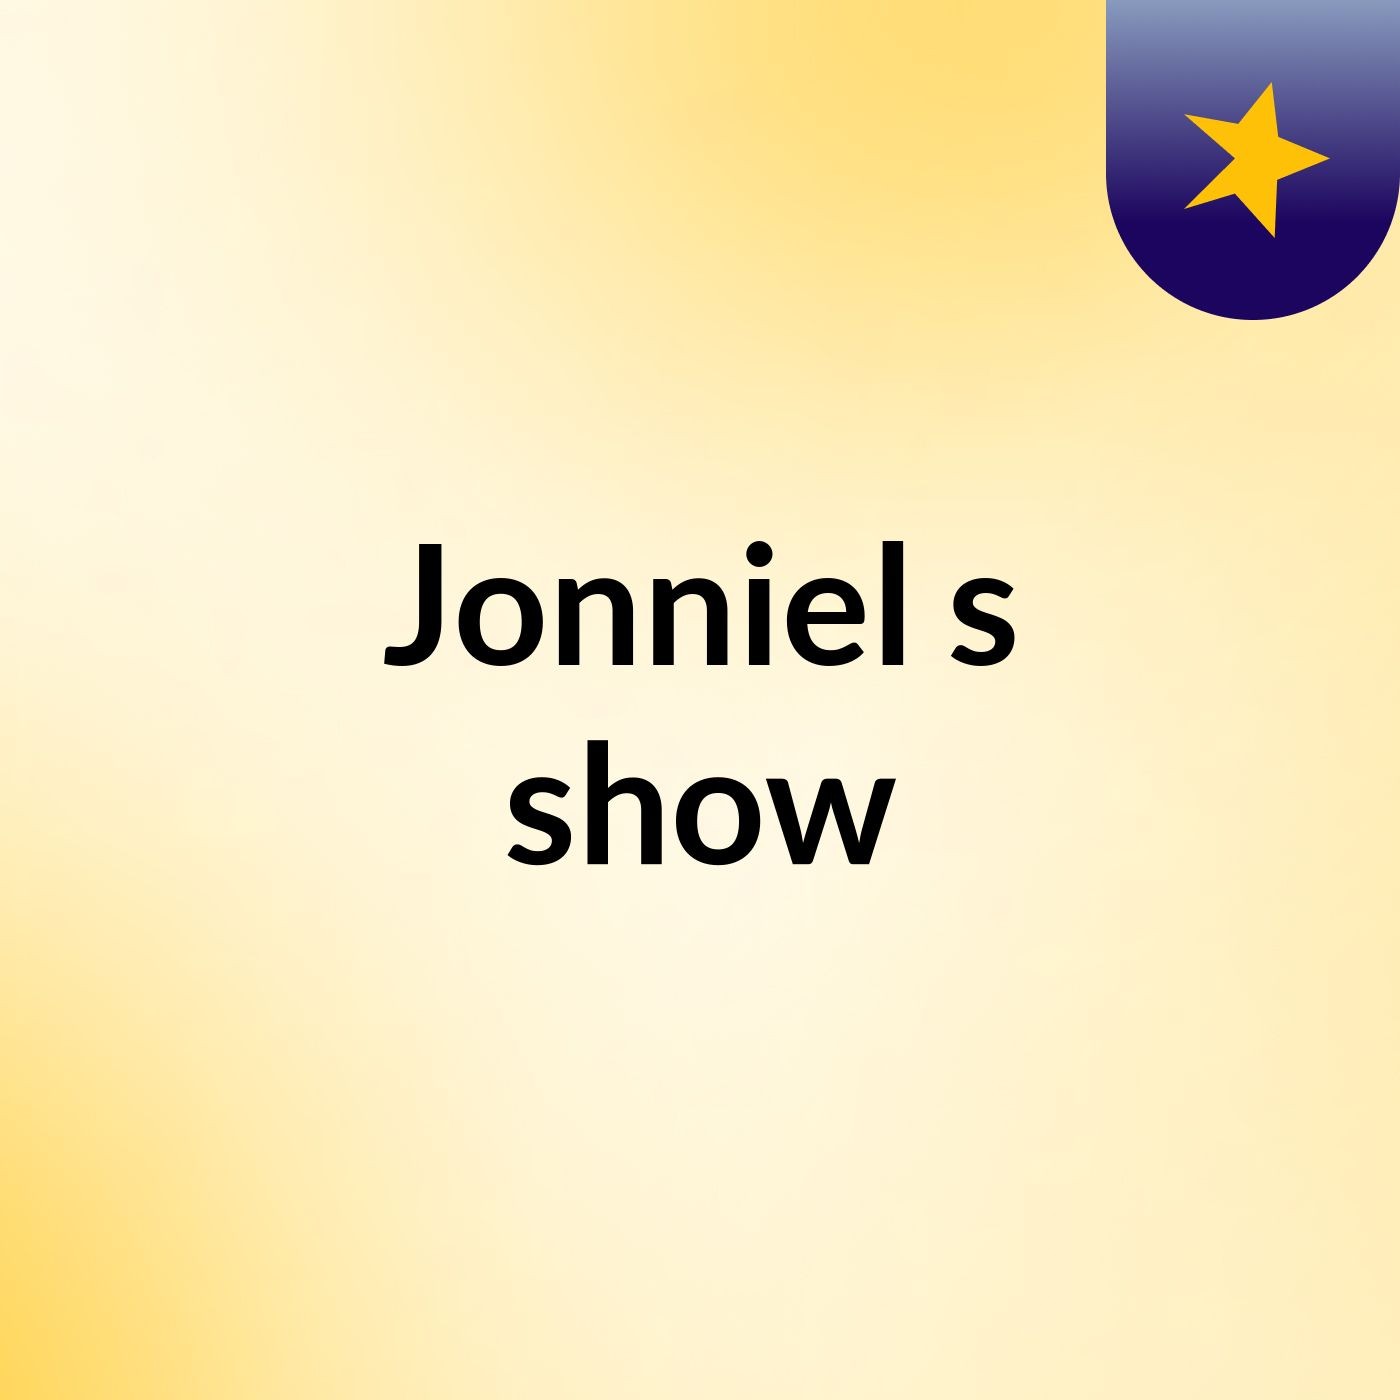 Jonniel's show